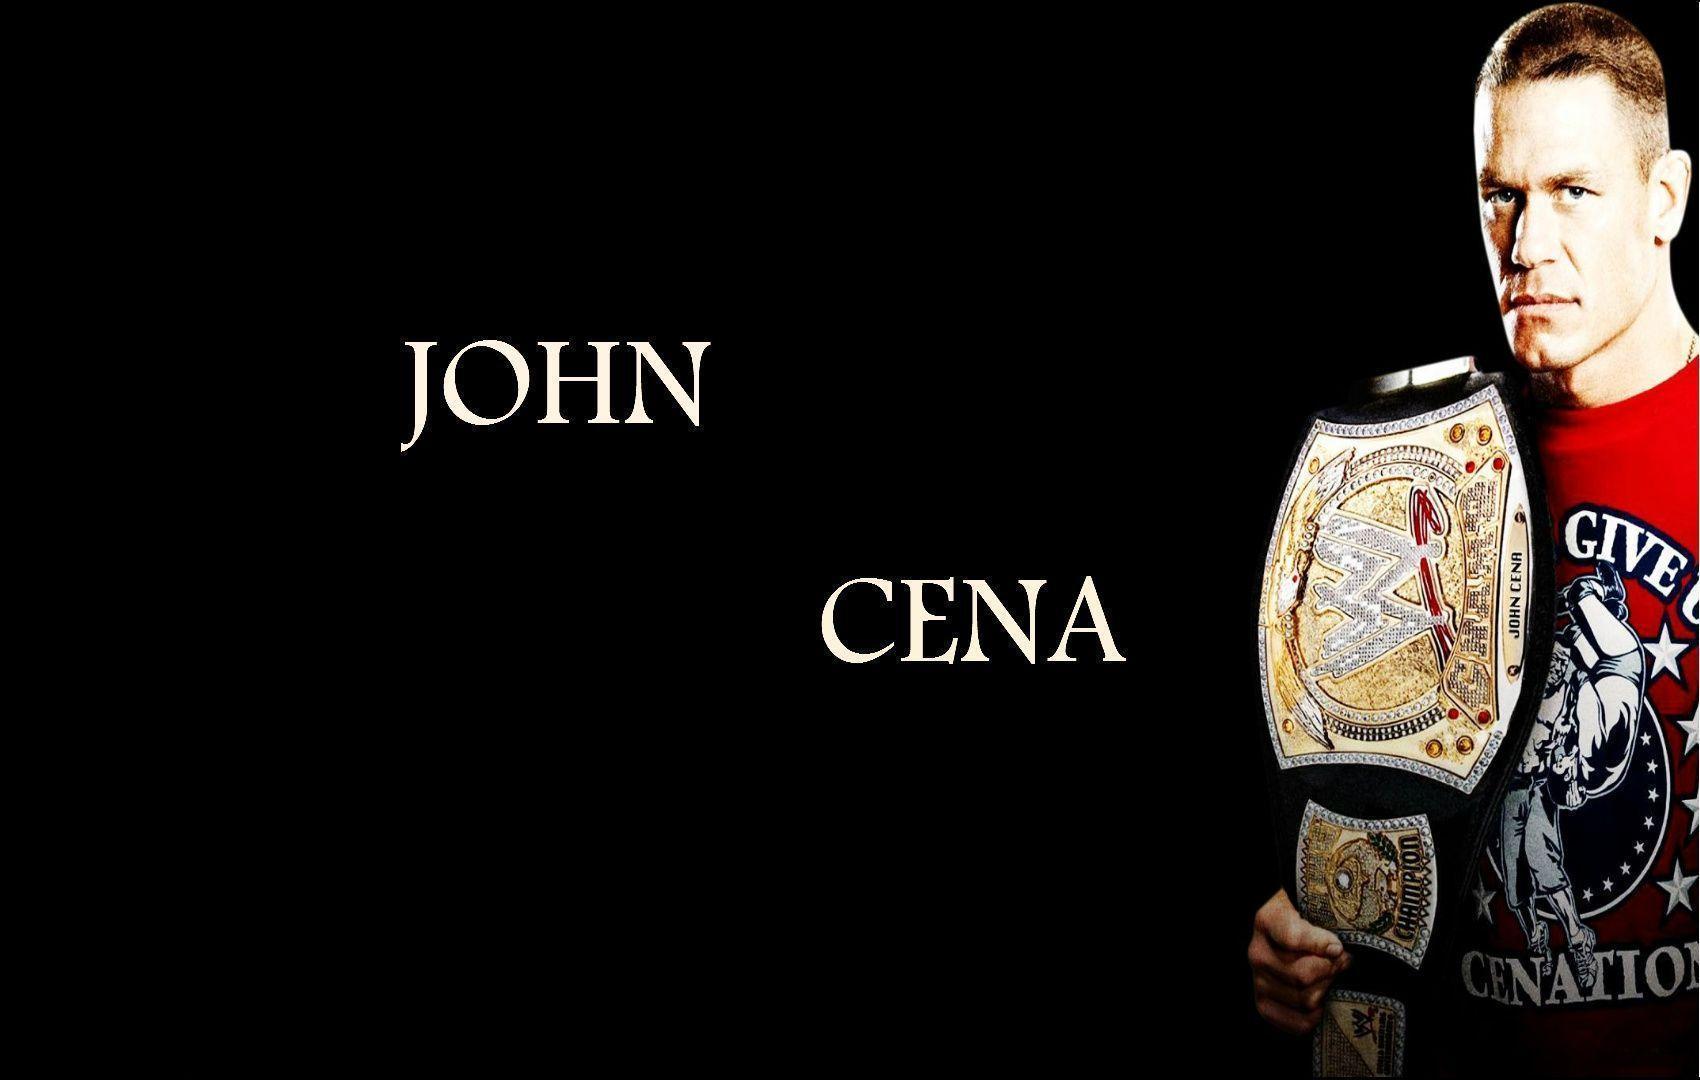 John Cena 2016 Latest HD Image, Photo and Wallpaper